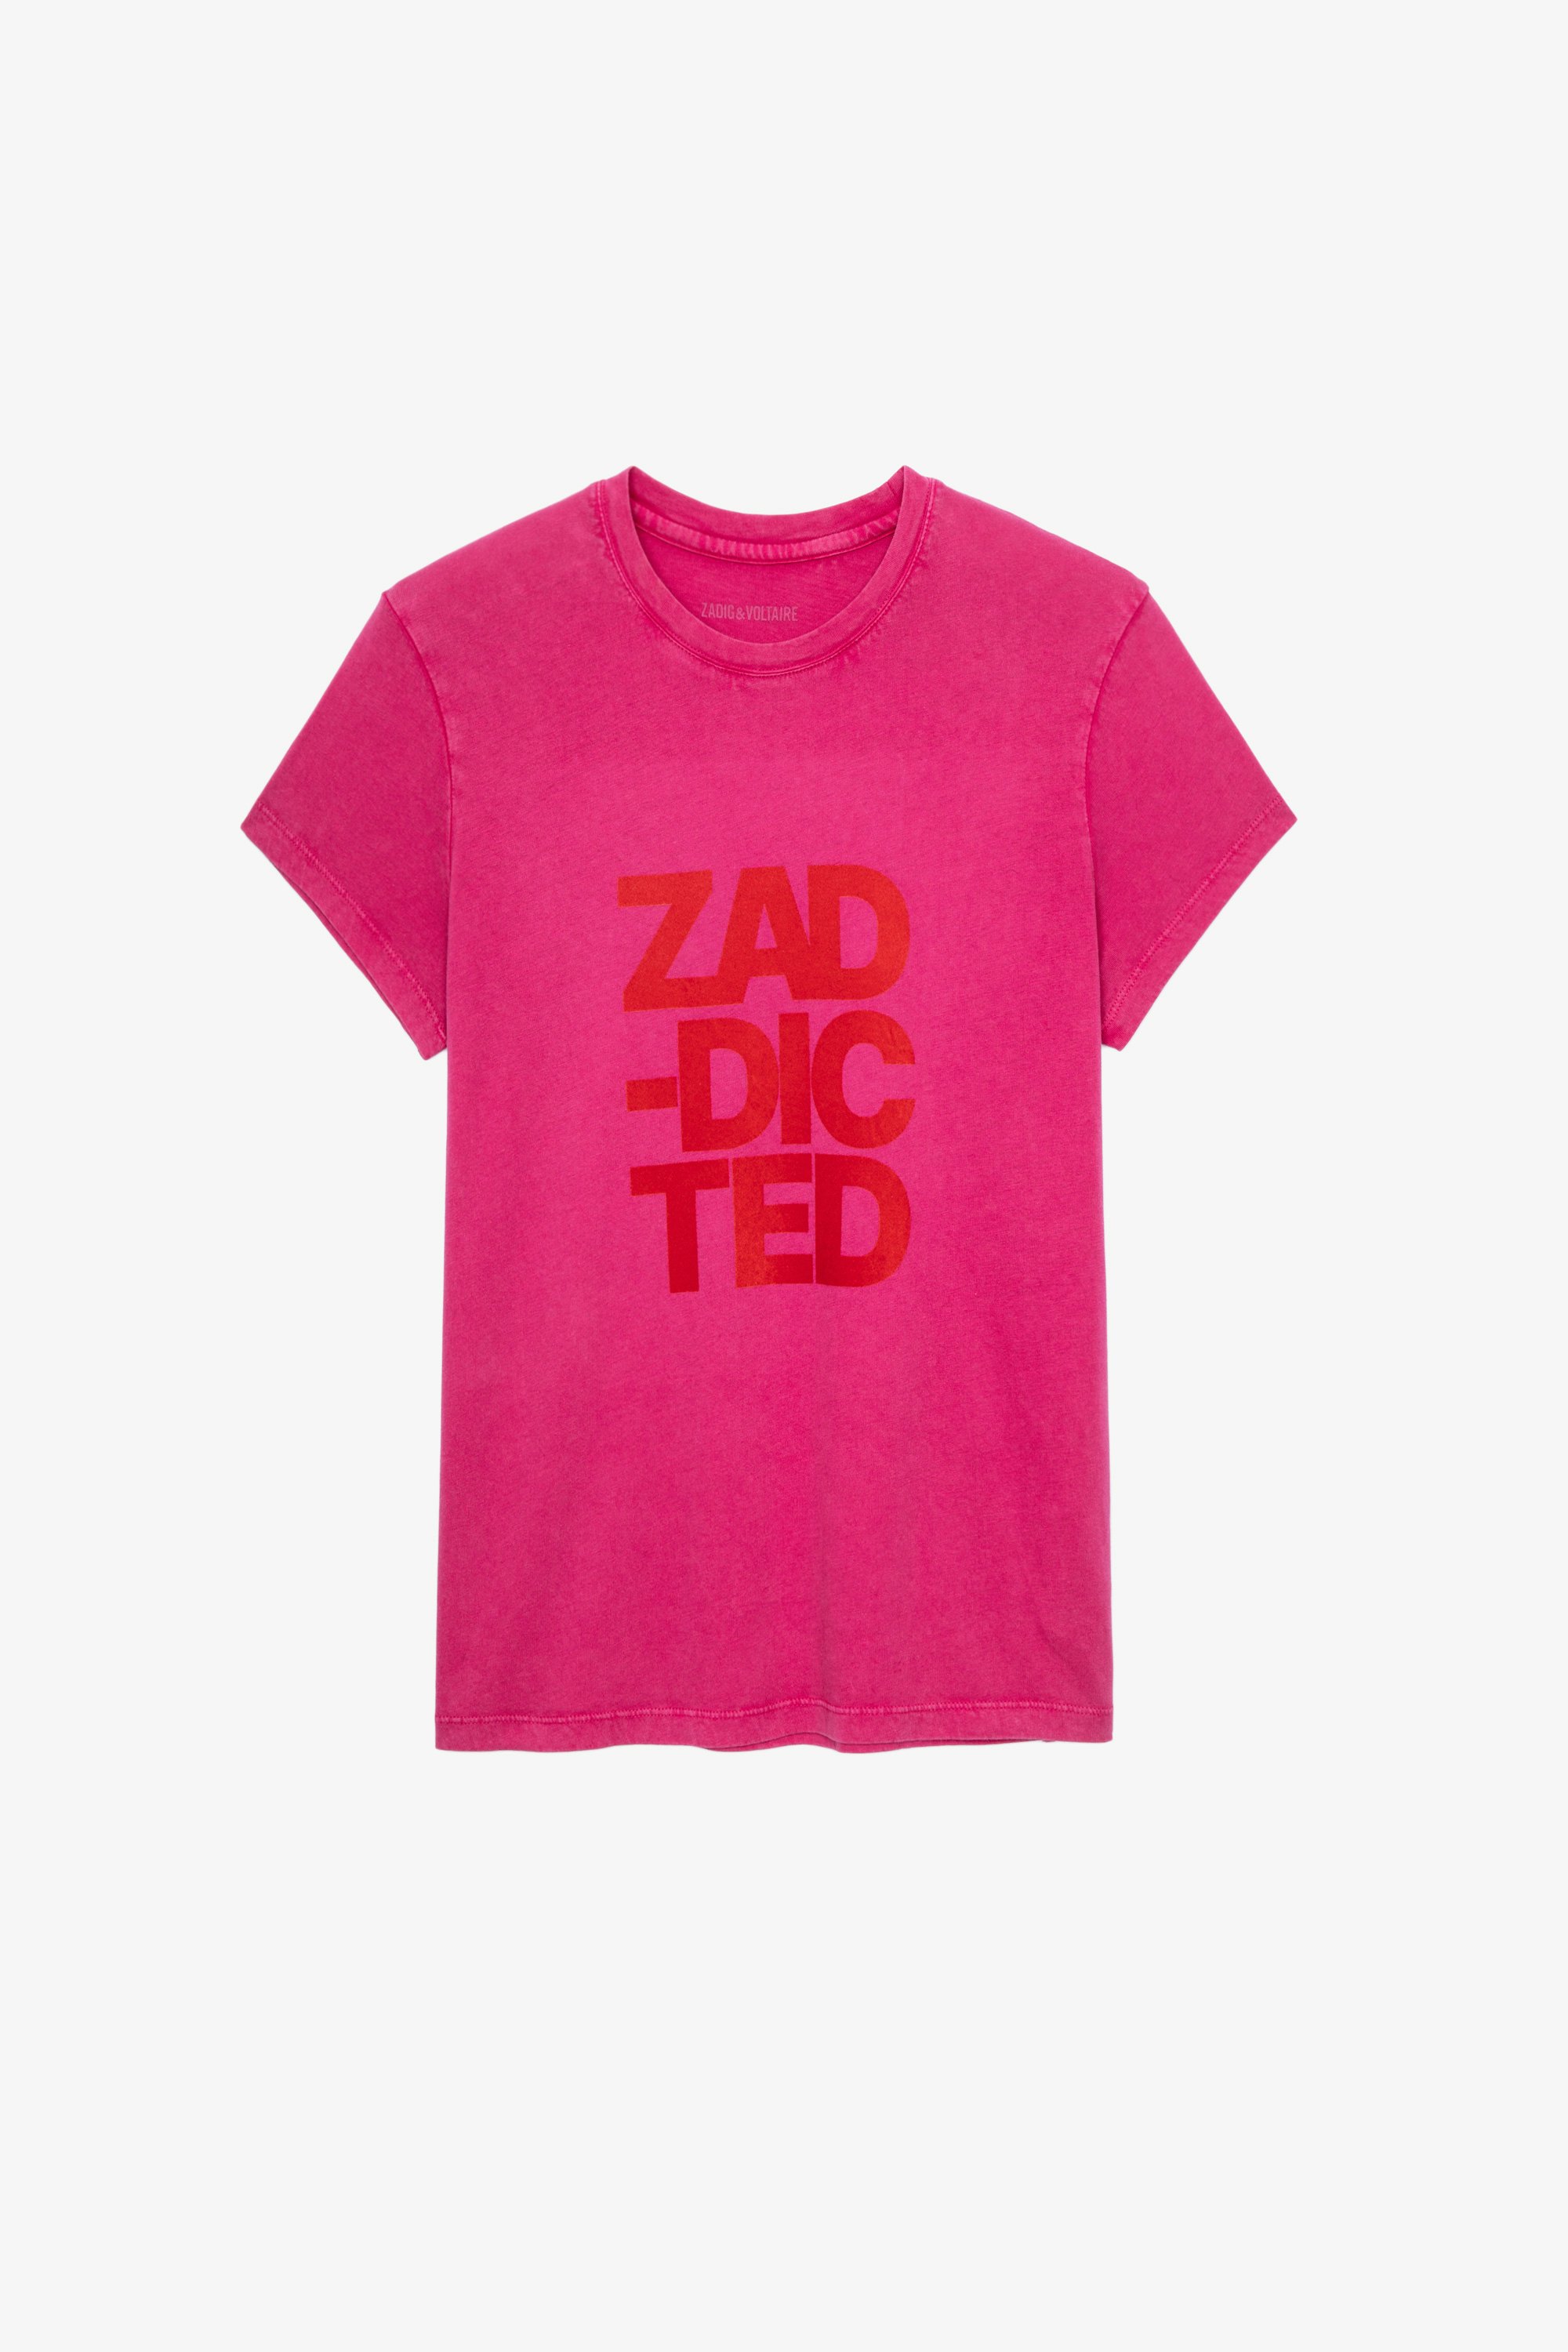 Zoe Zaddicted T-shirt Women's pink cotton T-shirt with “Zaddicted” slogan